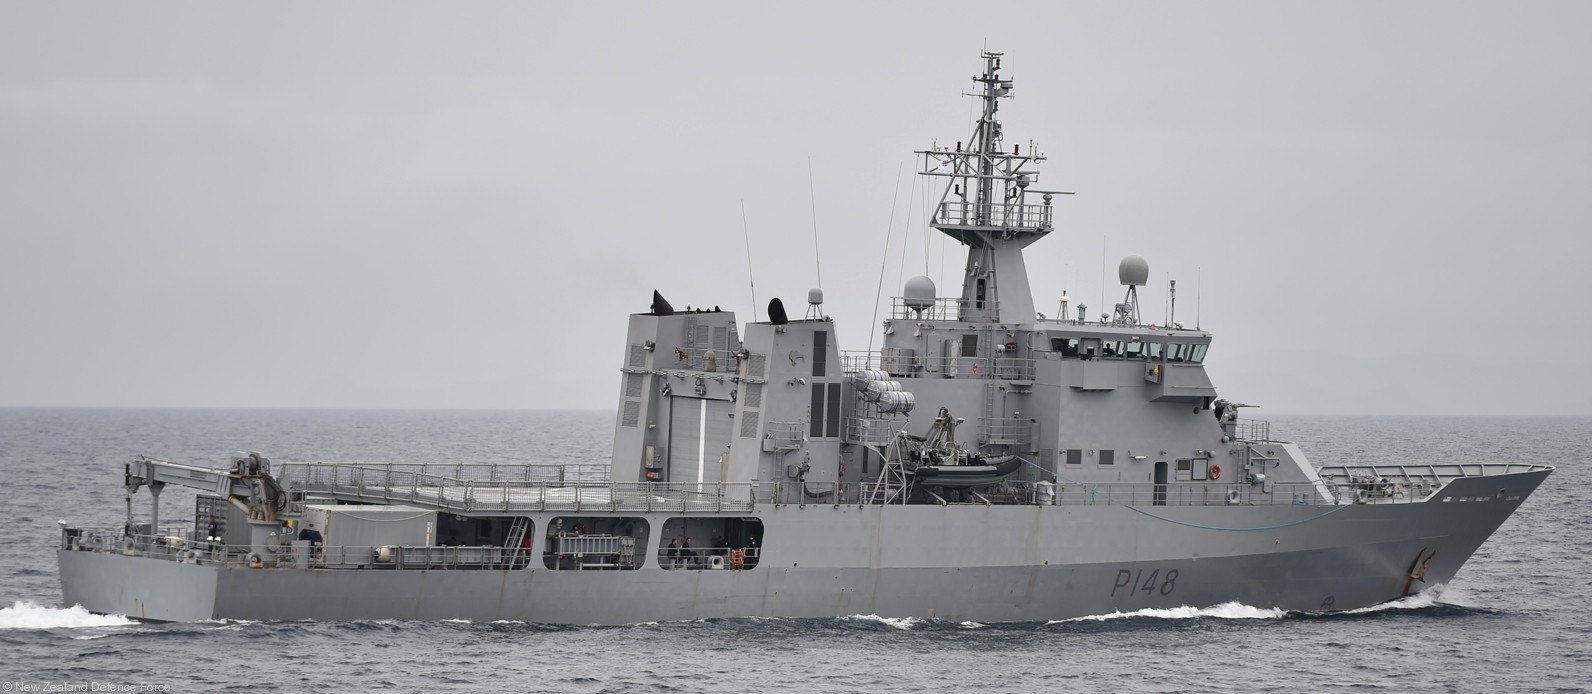 p-148 hmnzs otago protector class offshore patrol vessel opv royal new zealand navy 02